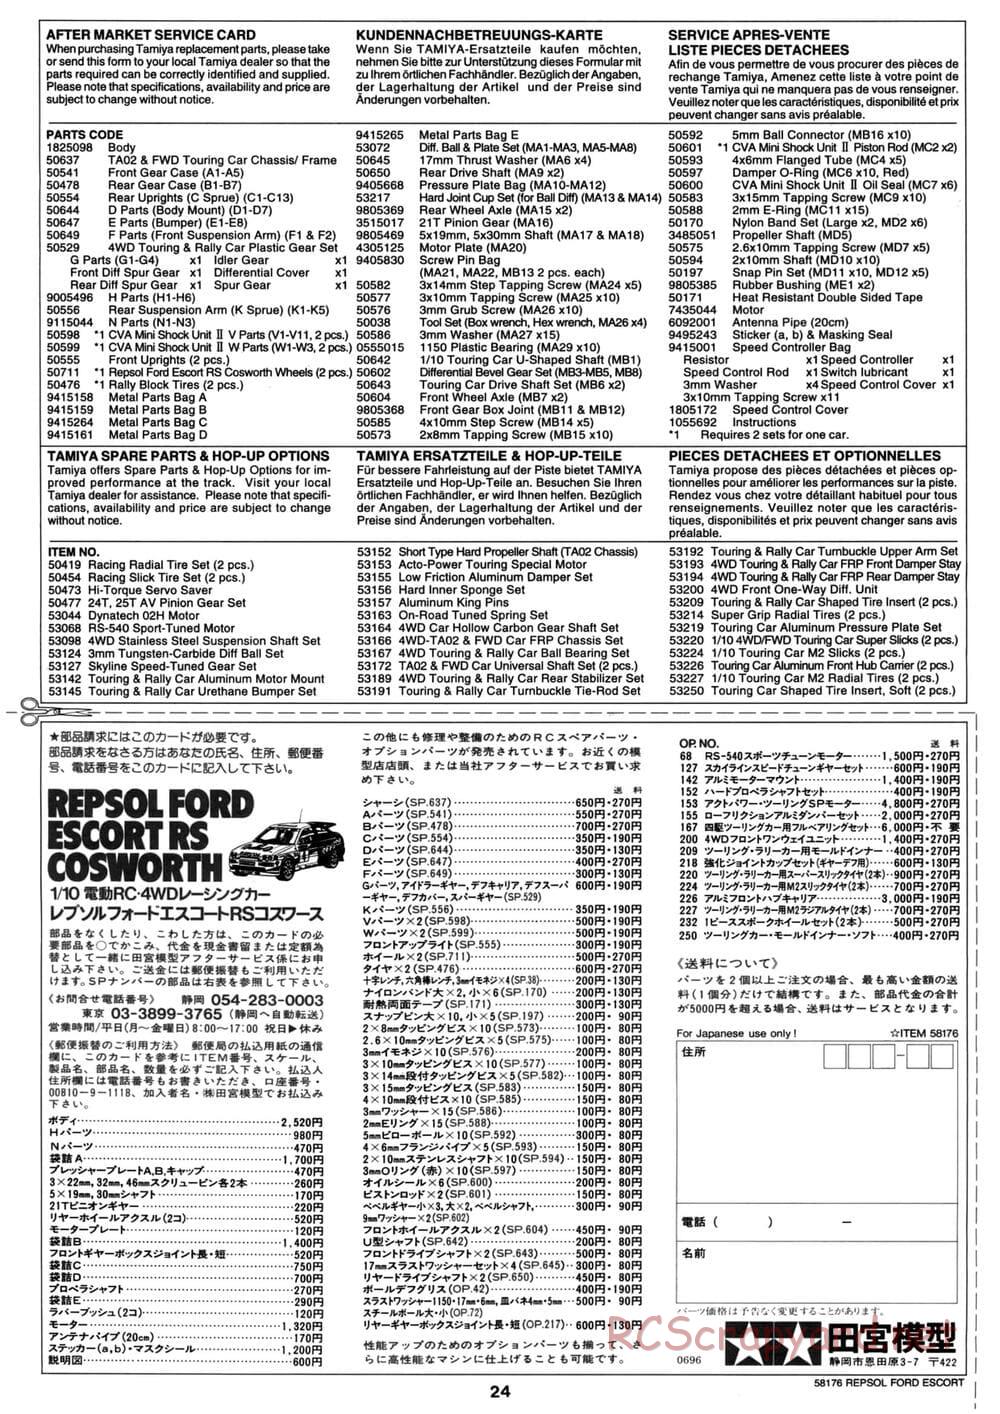 Tamiya - Repsol Ford Escort RS Cosworth - TA-02 Chassis - Manual - Page 24